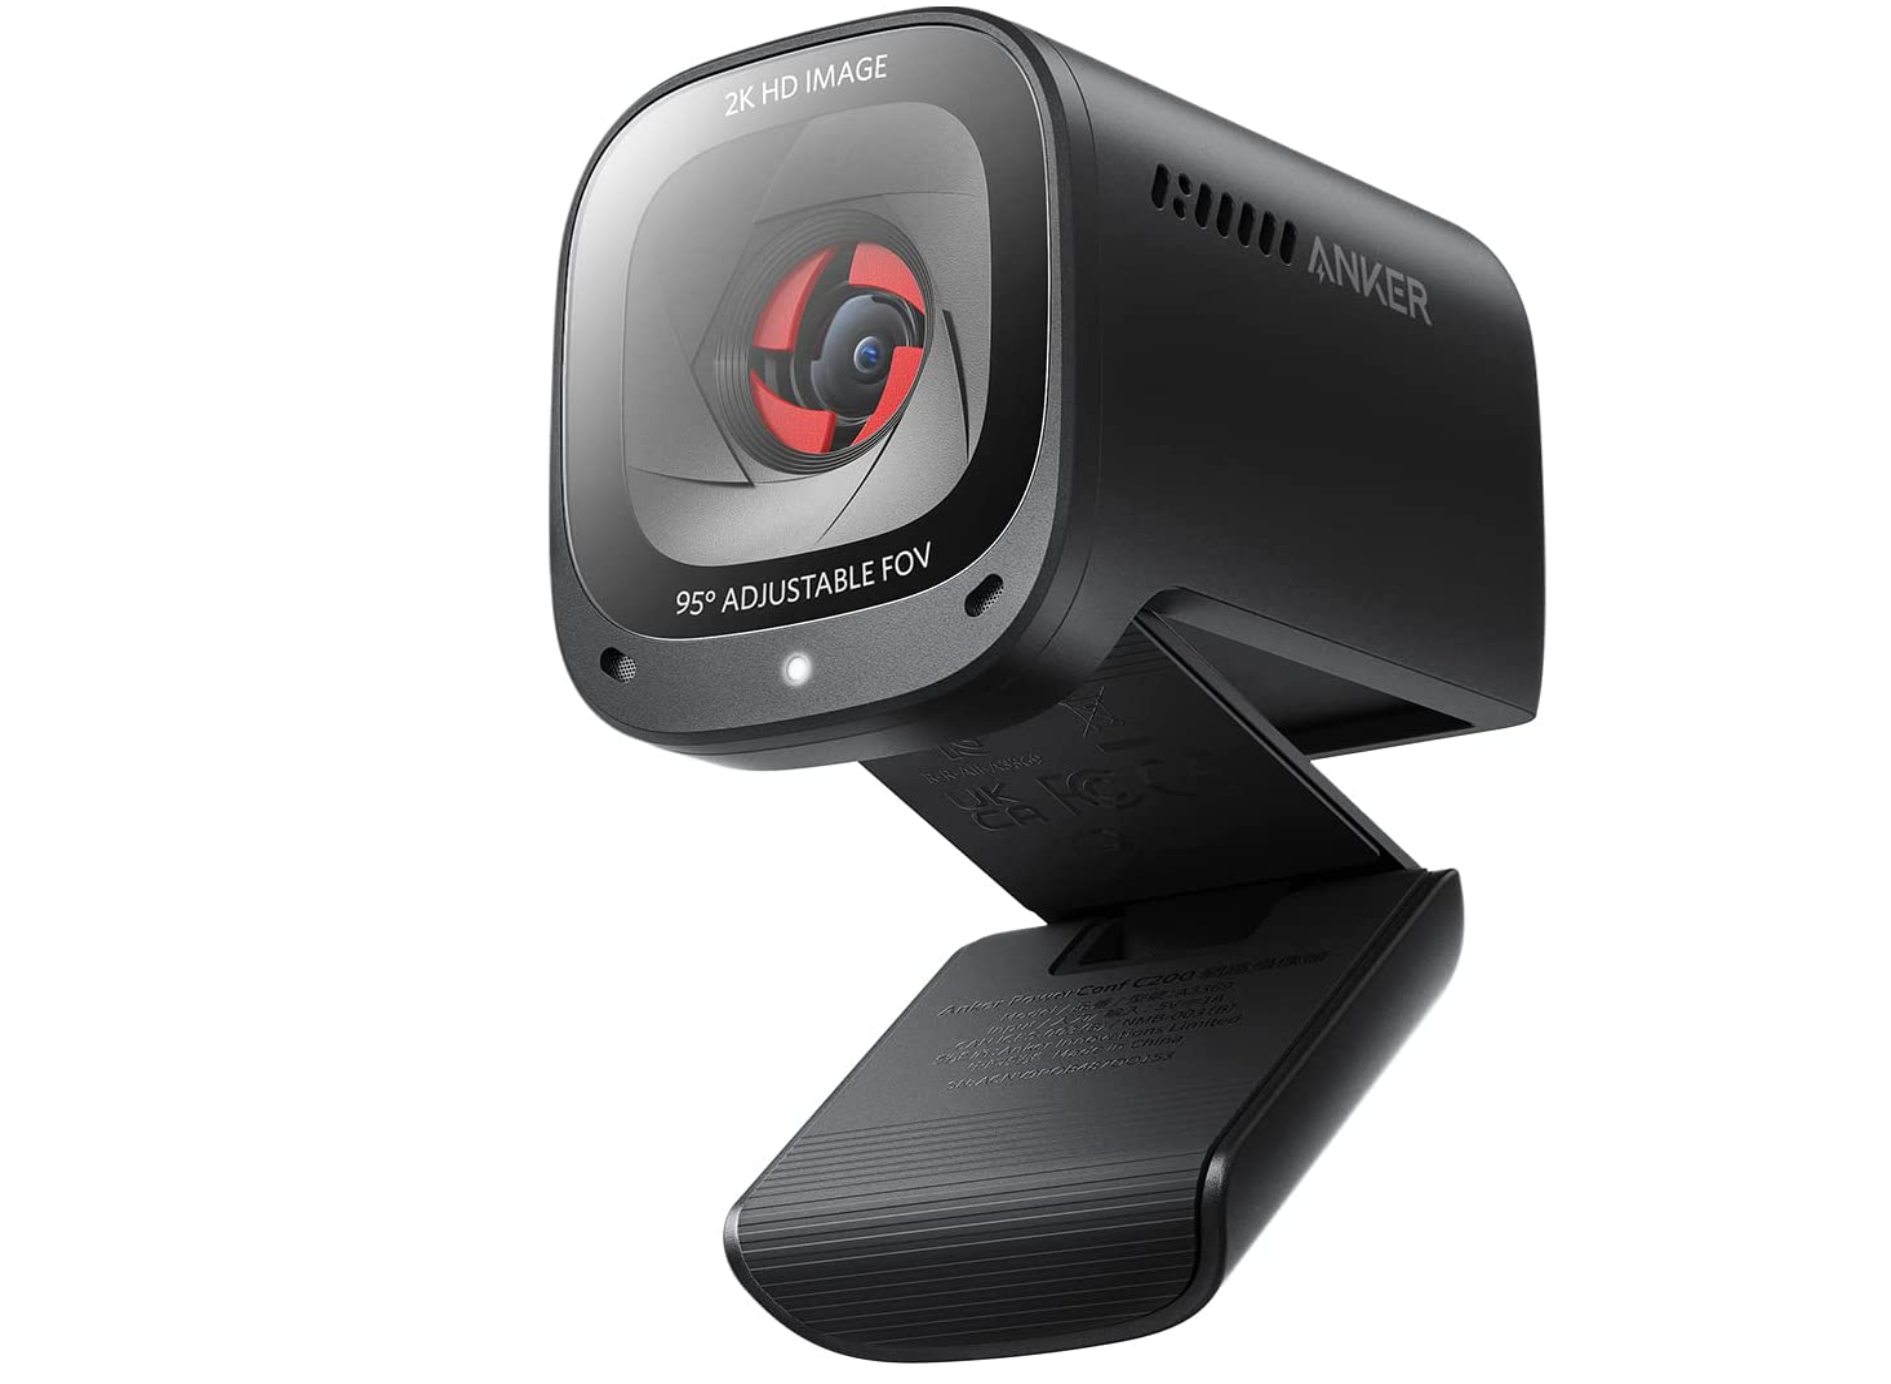 Anker PowerConf C200 - Best overall webcam